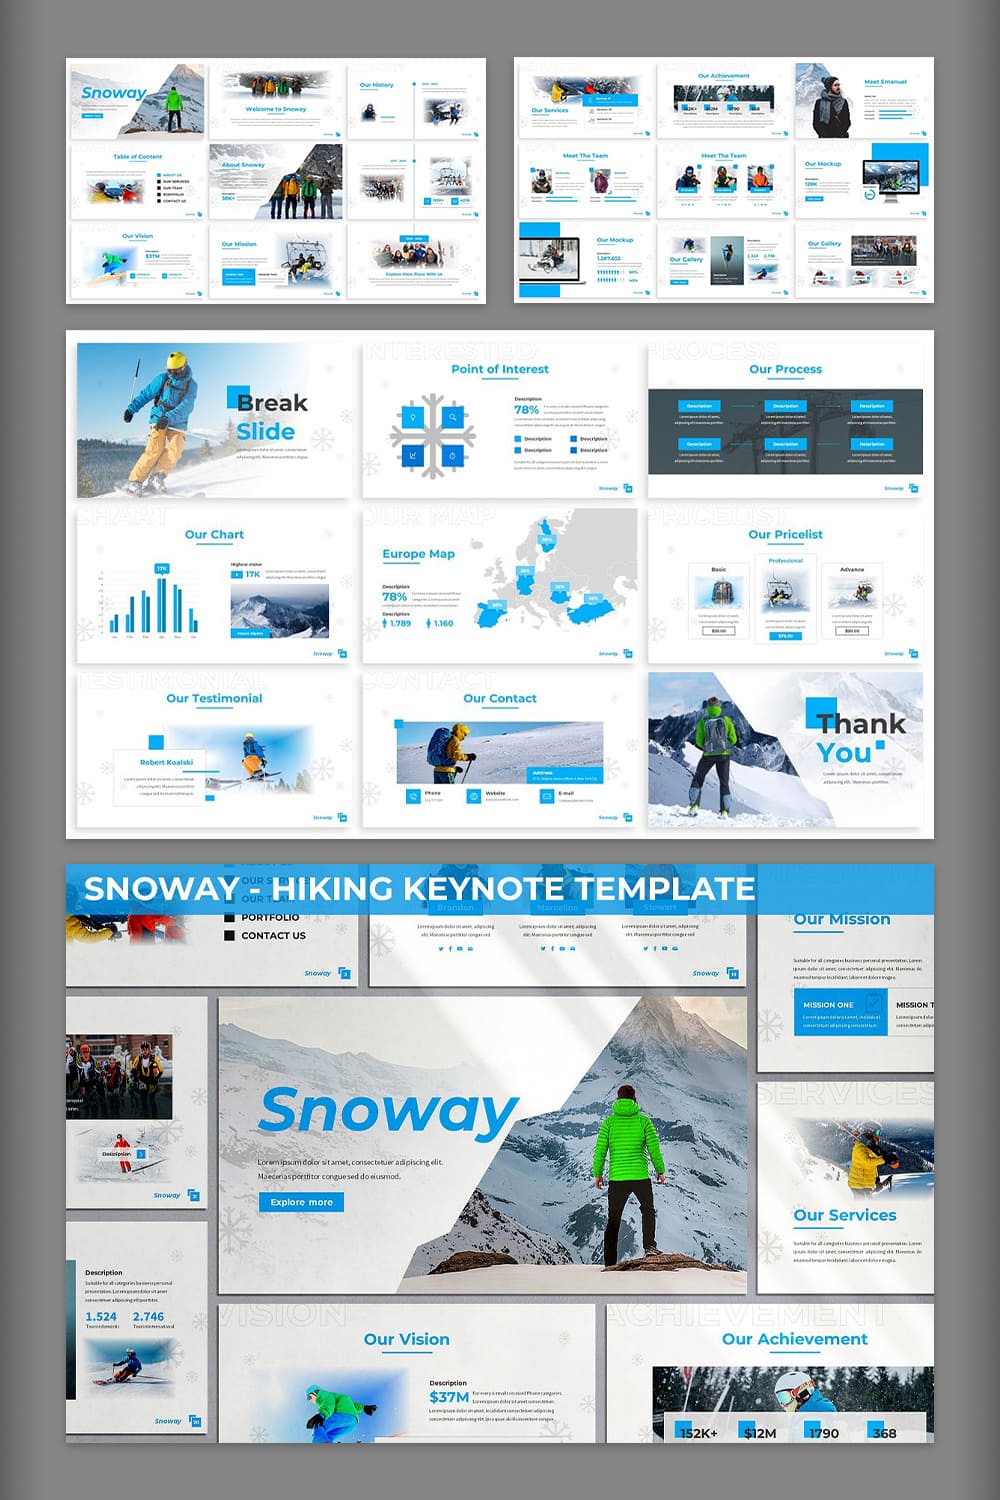 Snoway - Hiking Keynote Template.